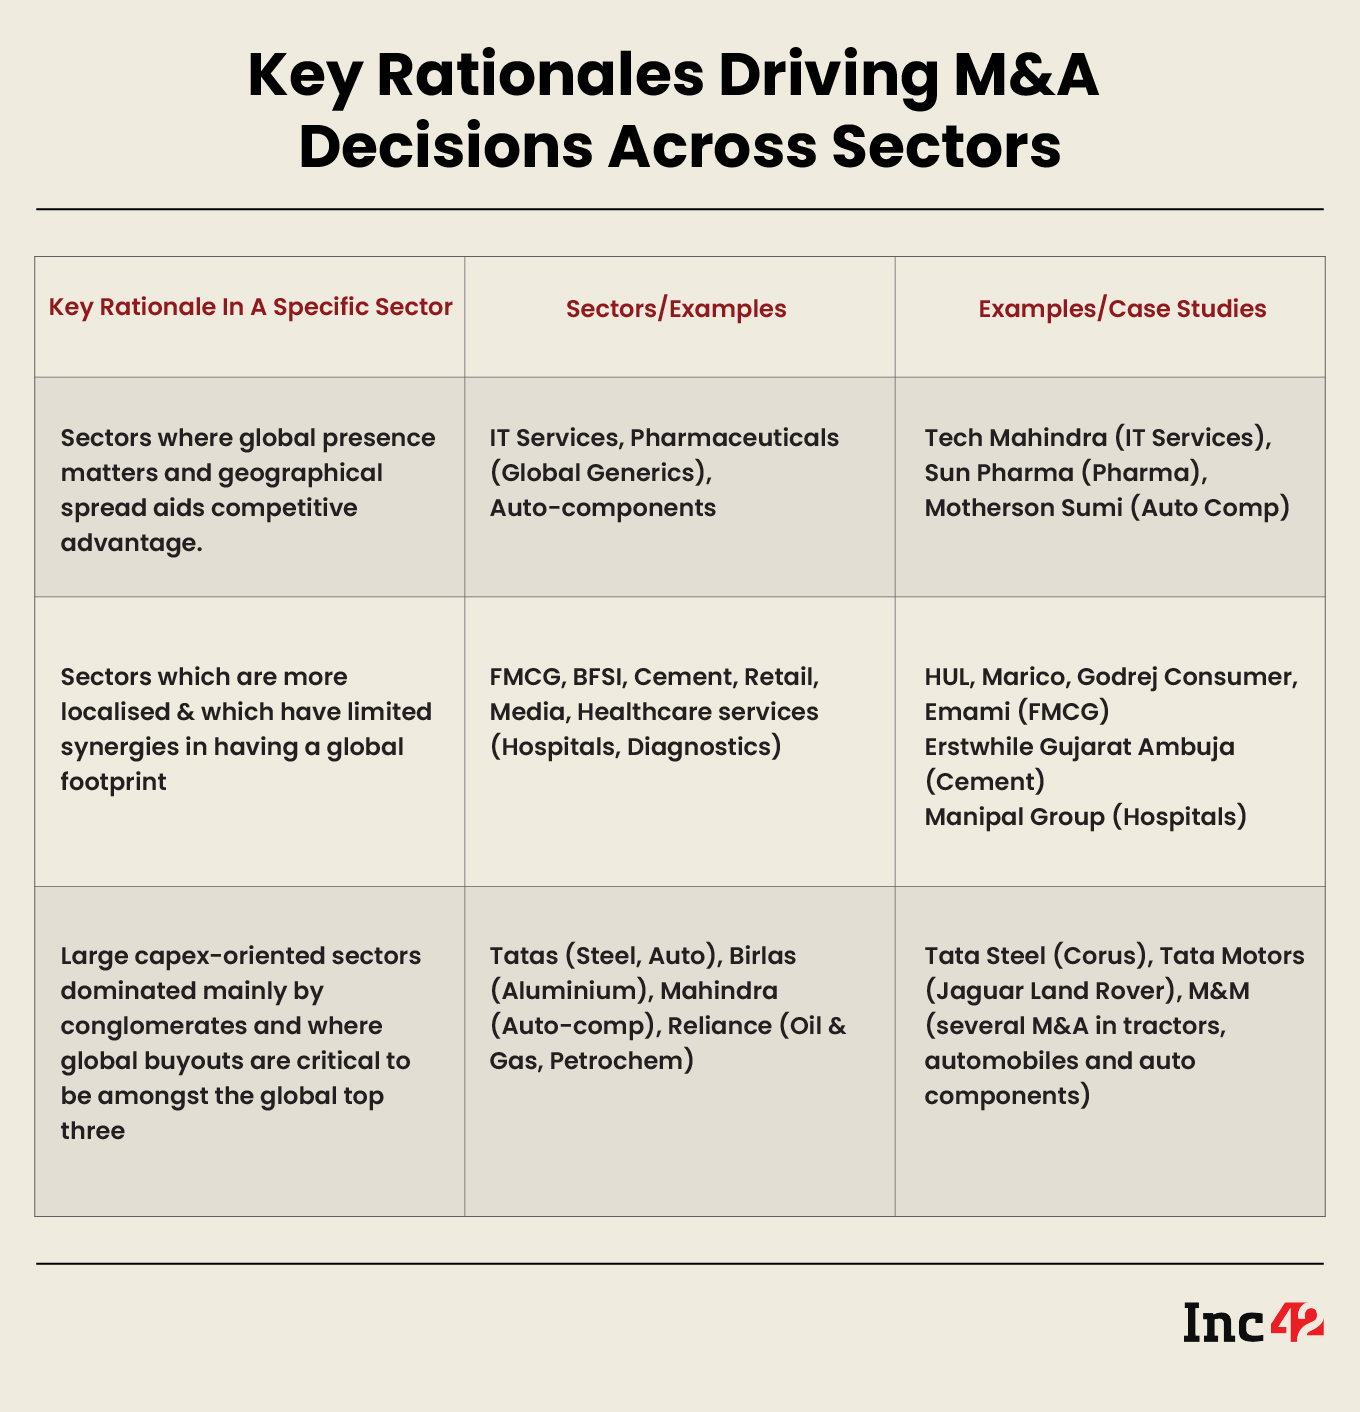 Key Rationales Driving M&A Decisions Across Sectors